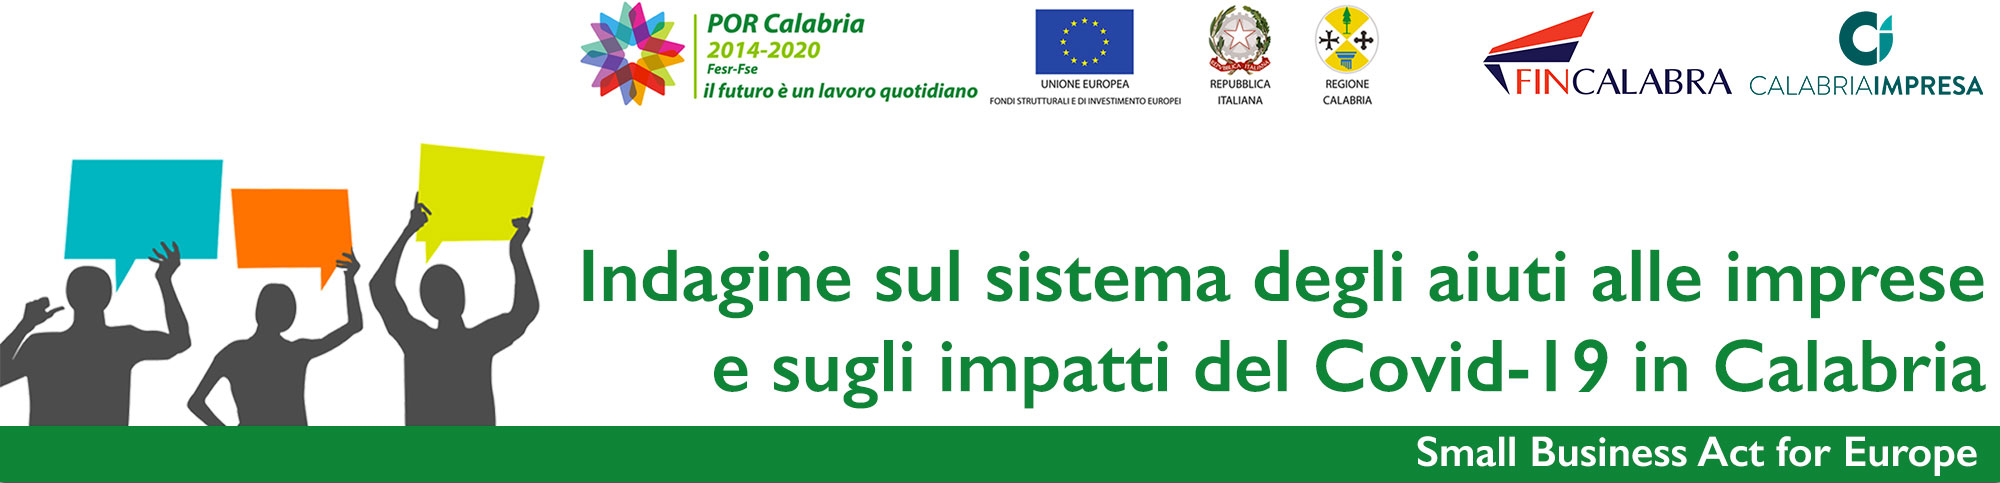 CalabriaImpresa - Small Business Act for Europe (SBA)